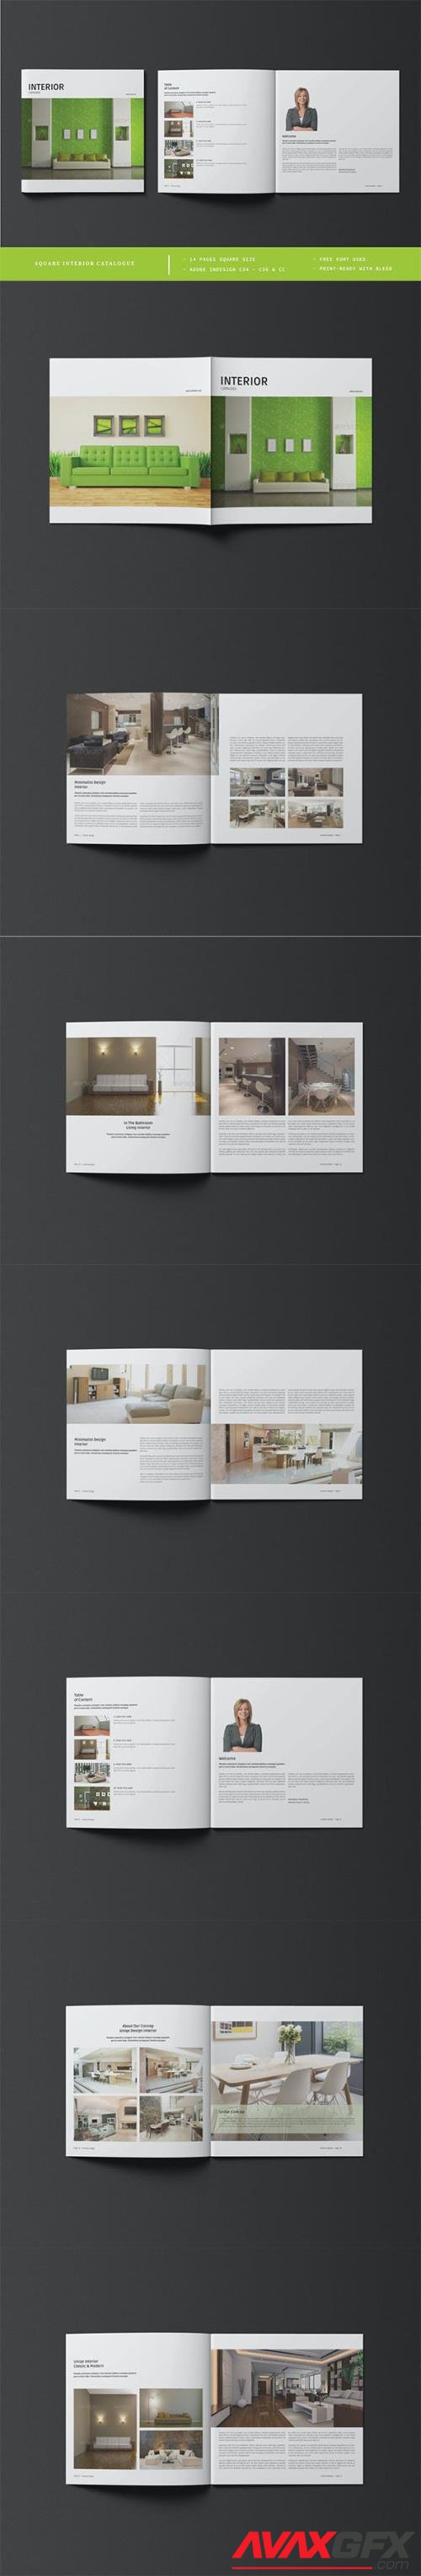 Square Interior Catalogue / Brochure